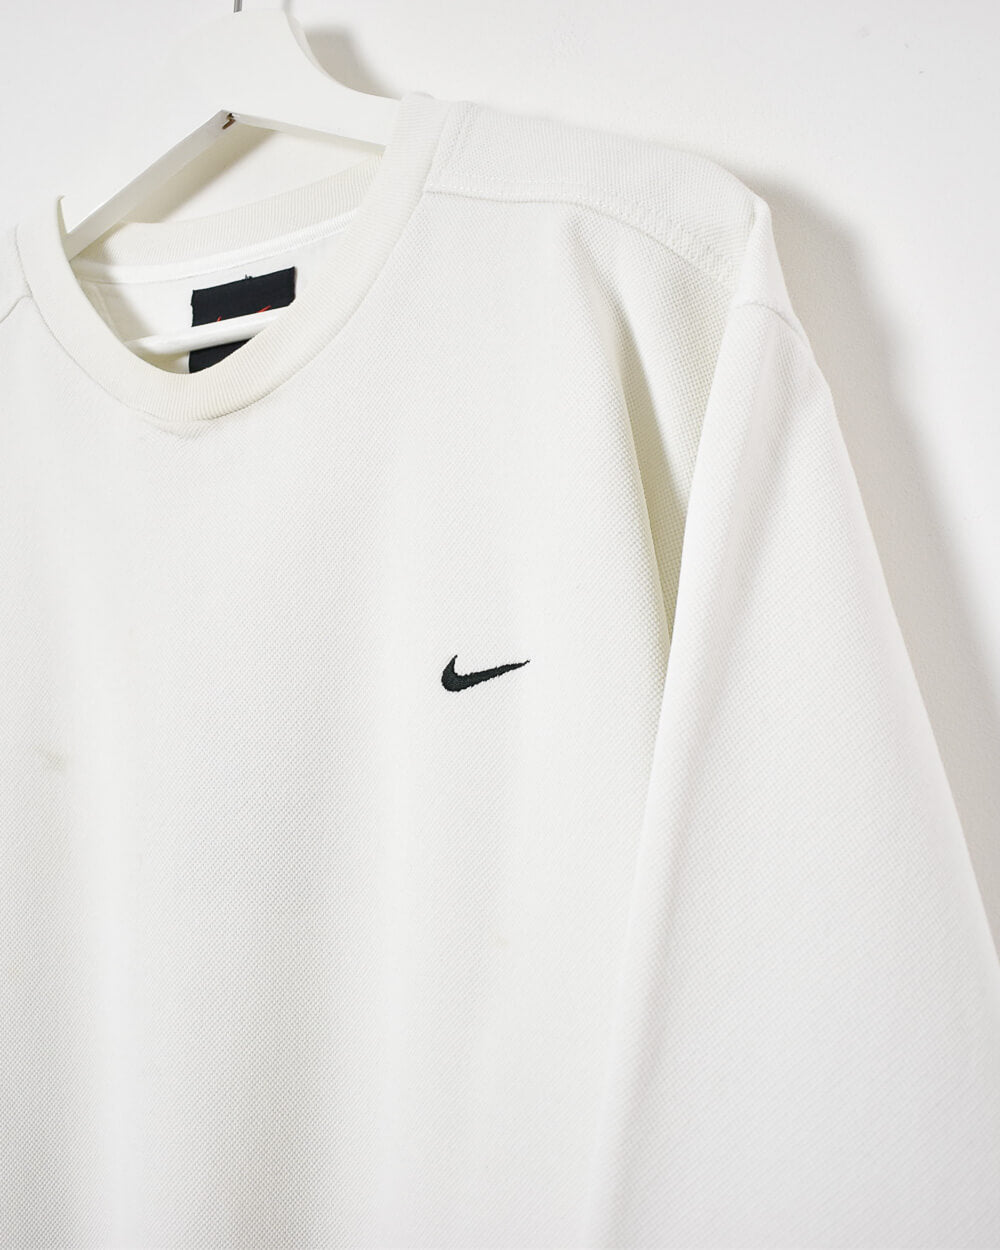 Nike Sweatshirt - Medium - Domno Vintage 90s, 80s, 00s Retro and Vintage Clothing 